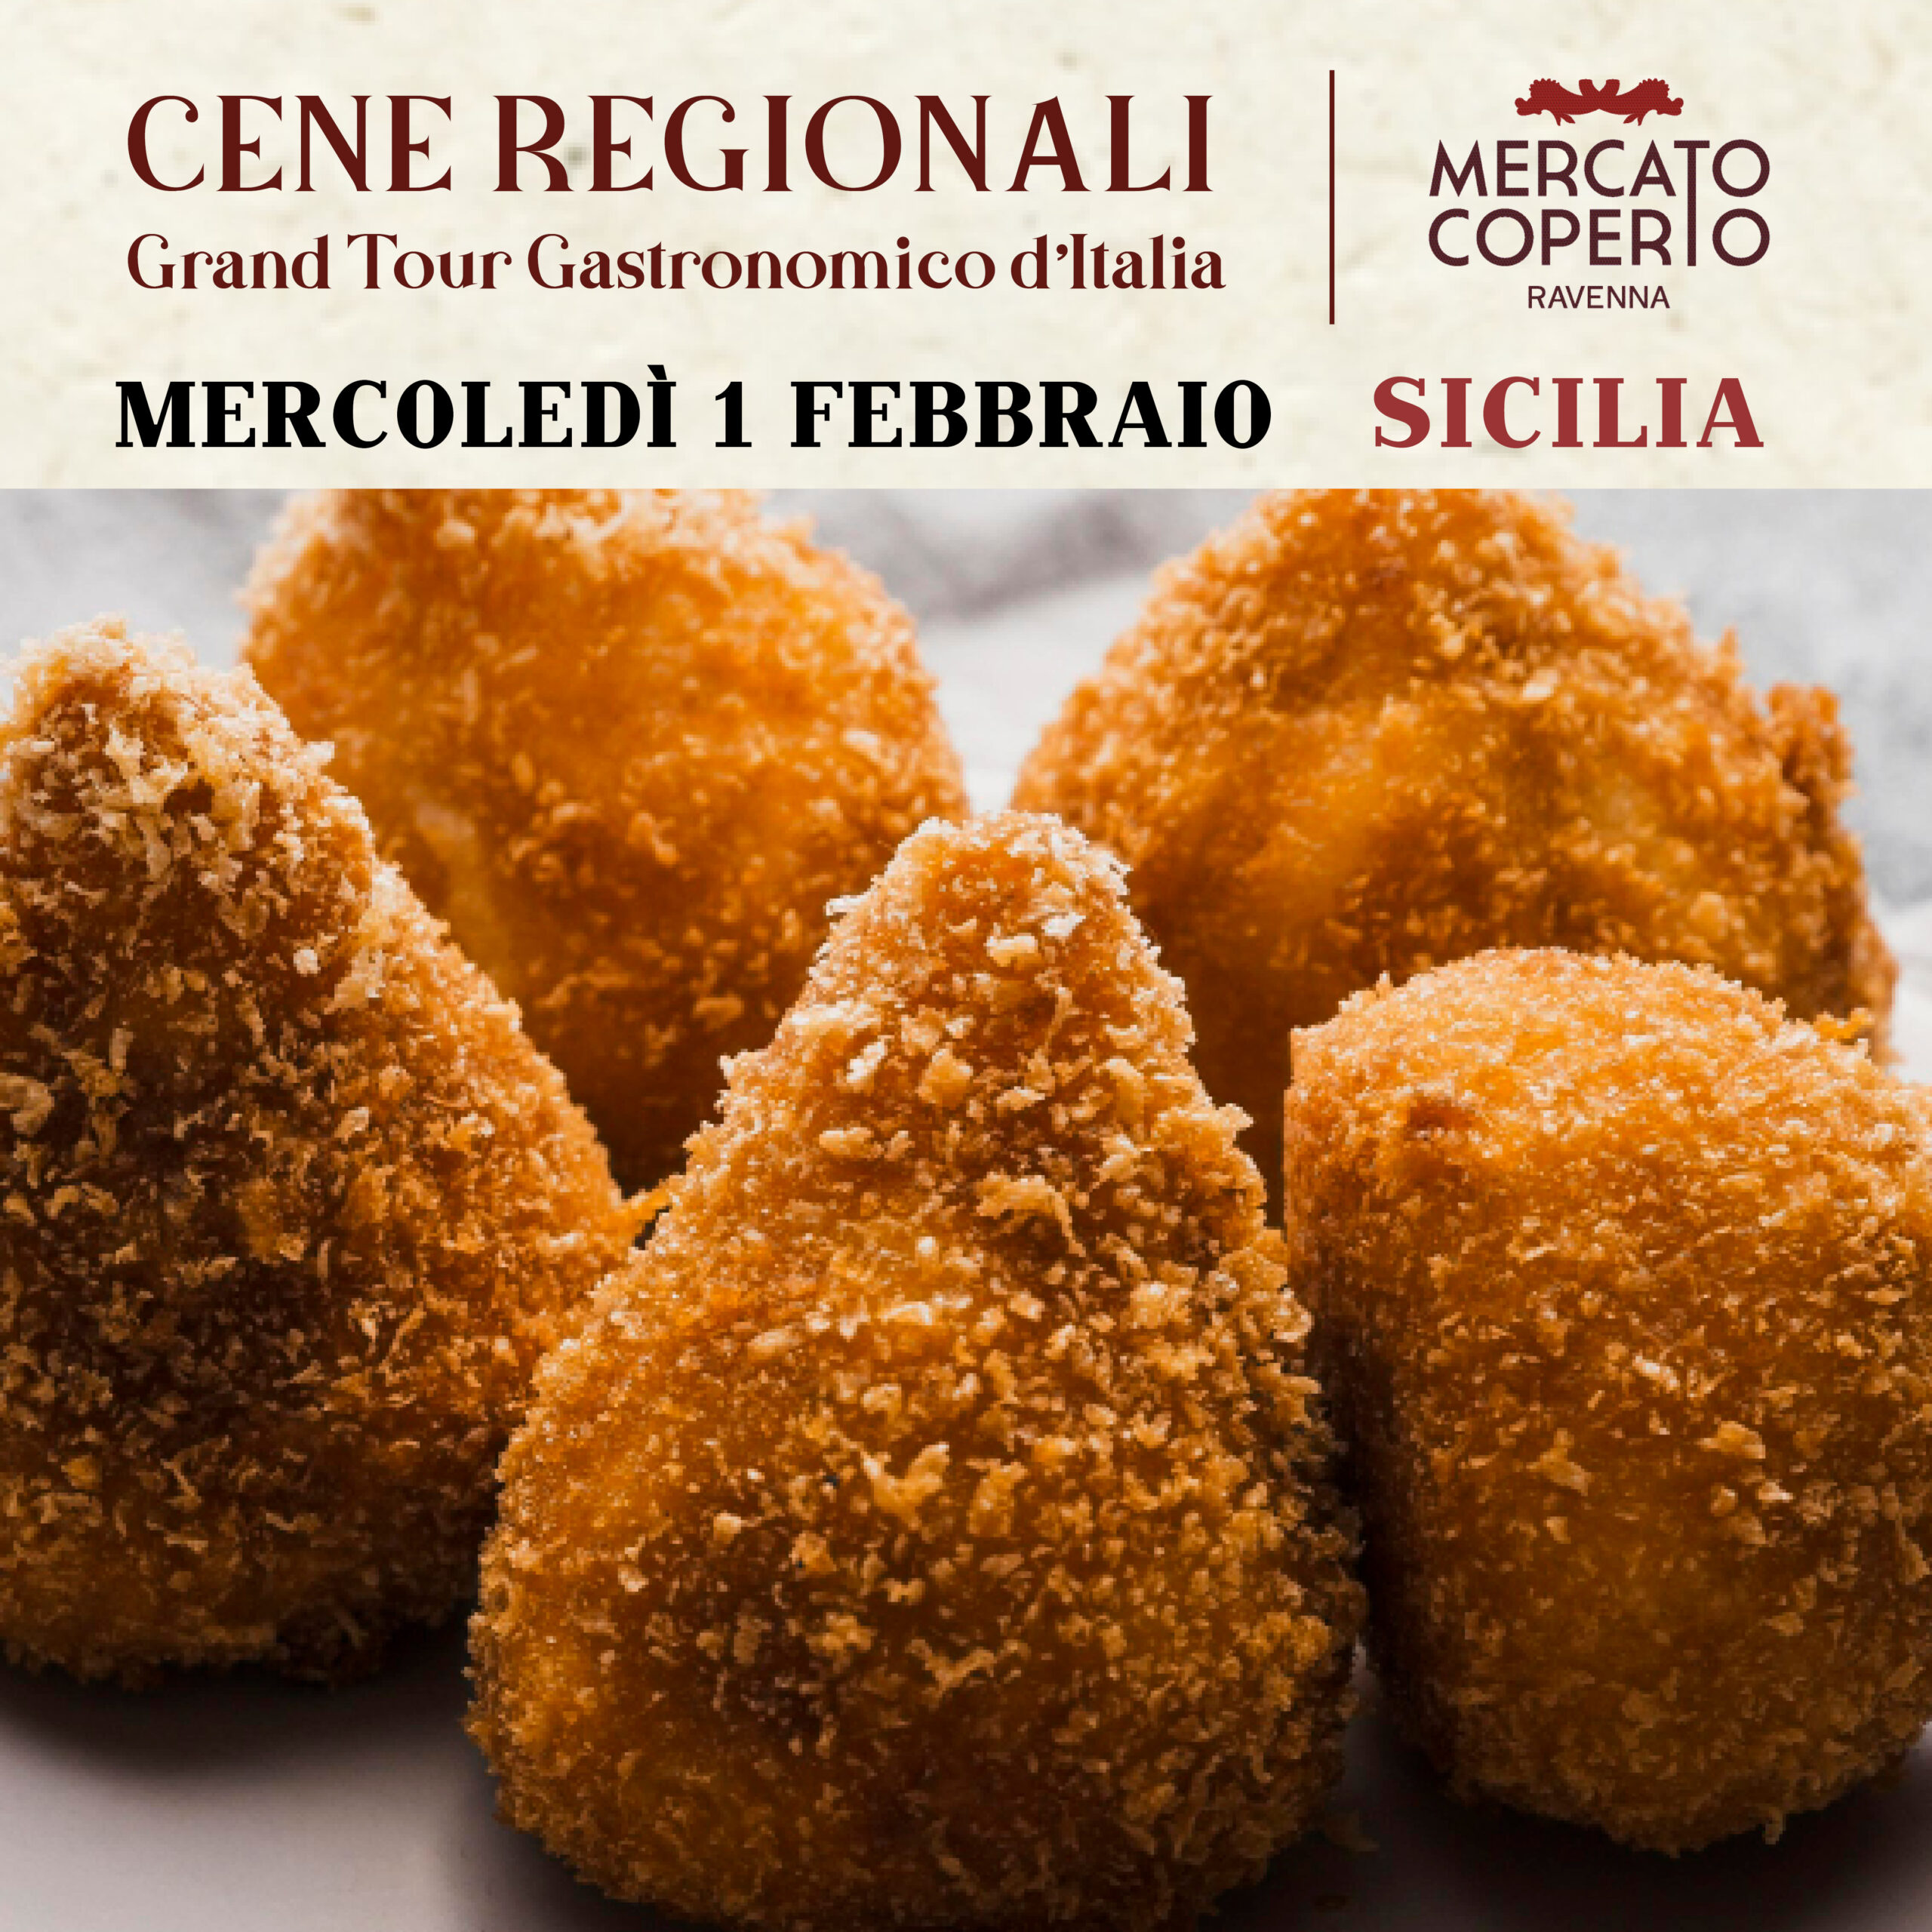 CENE REGIONALI Grand Tour gastronomico d’Italia